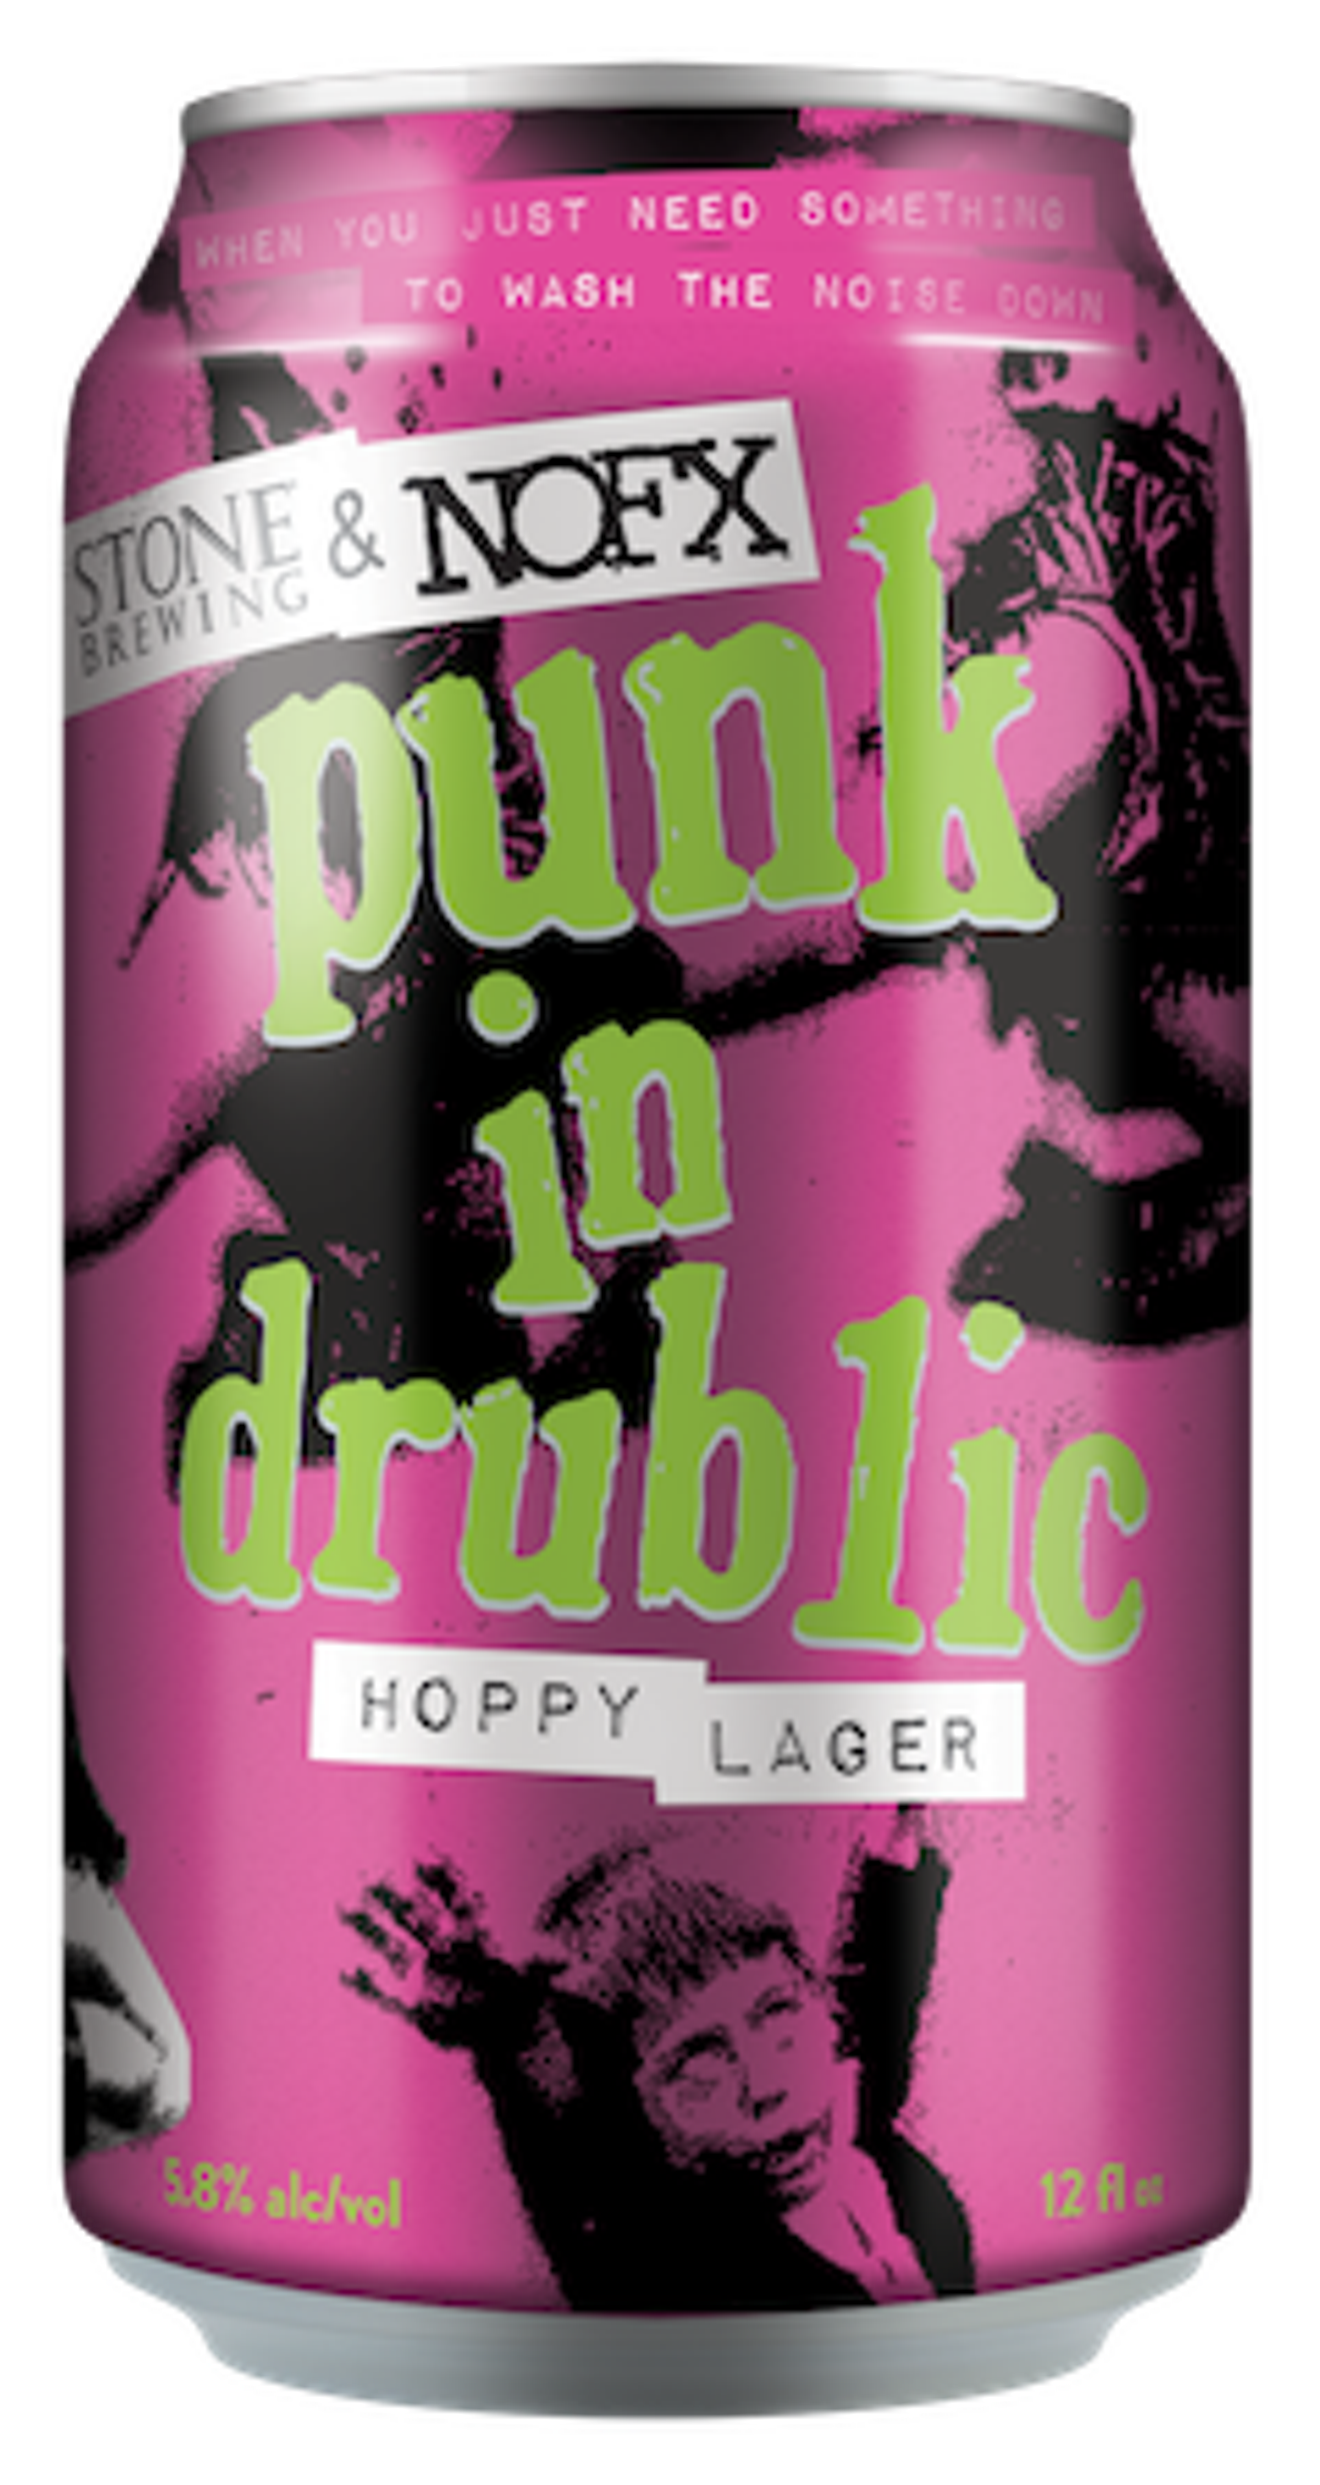 Tastings of the Stone & NOFX Punk in Drublic Hoppy Lager are definitely in store.